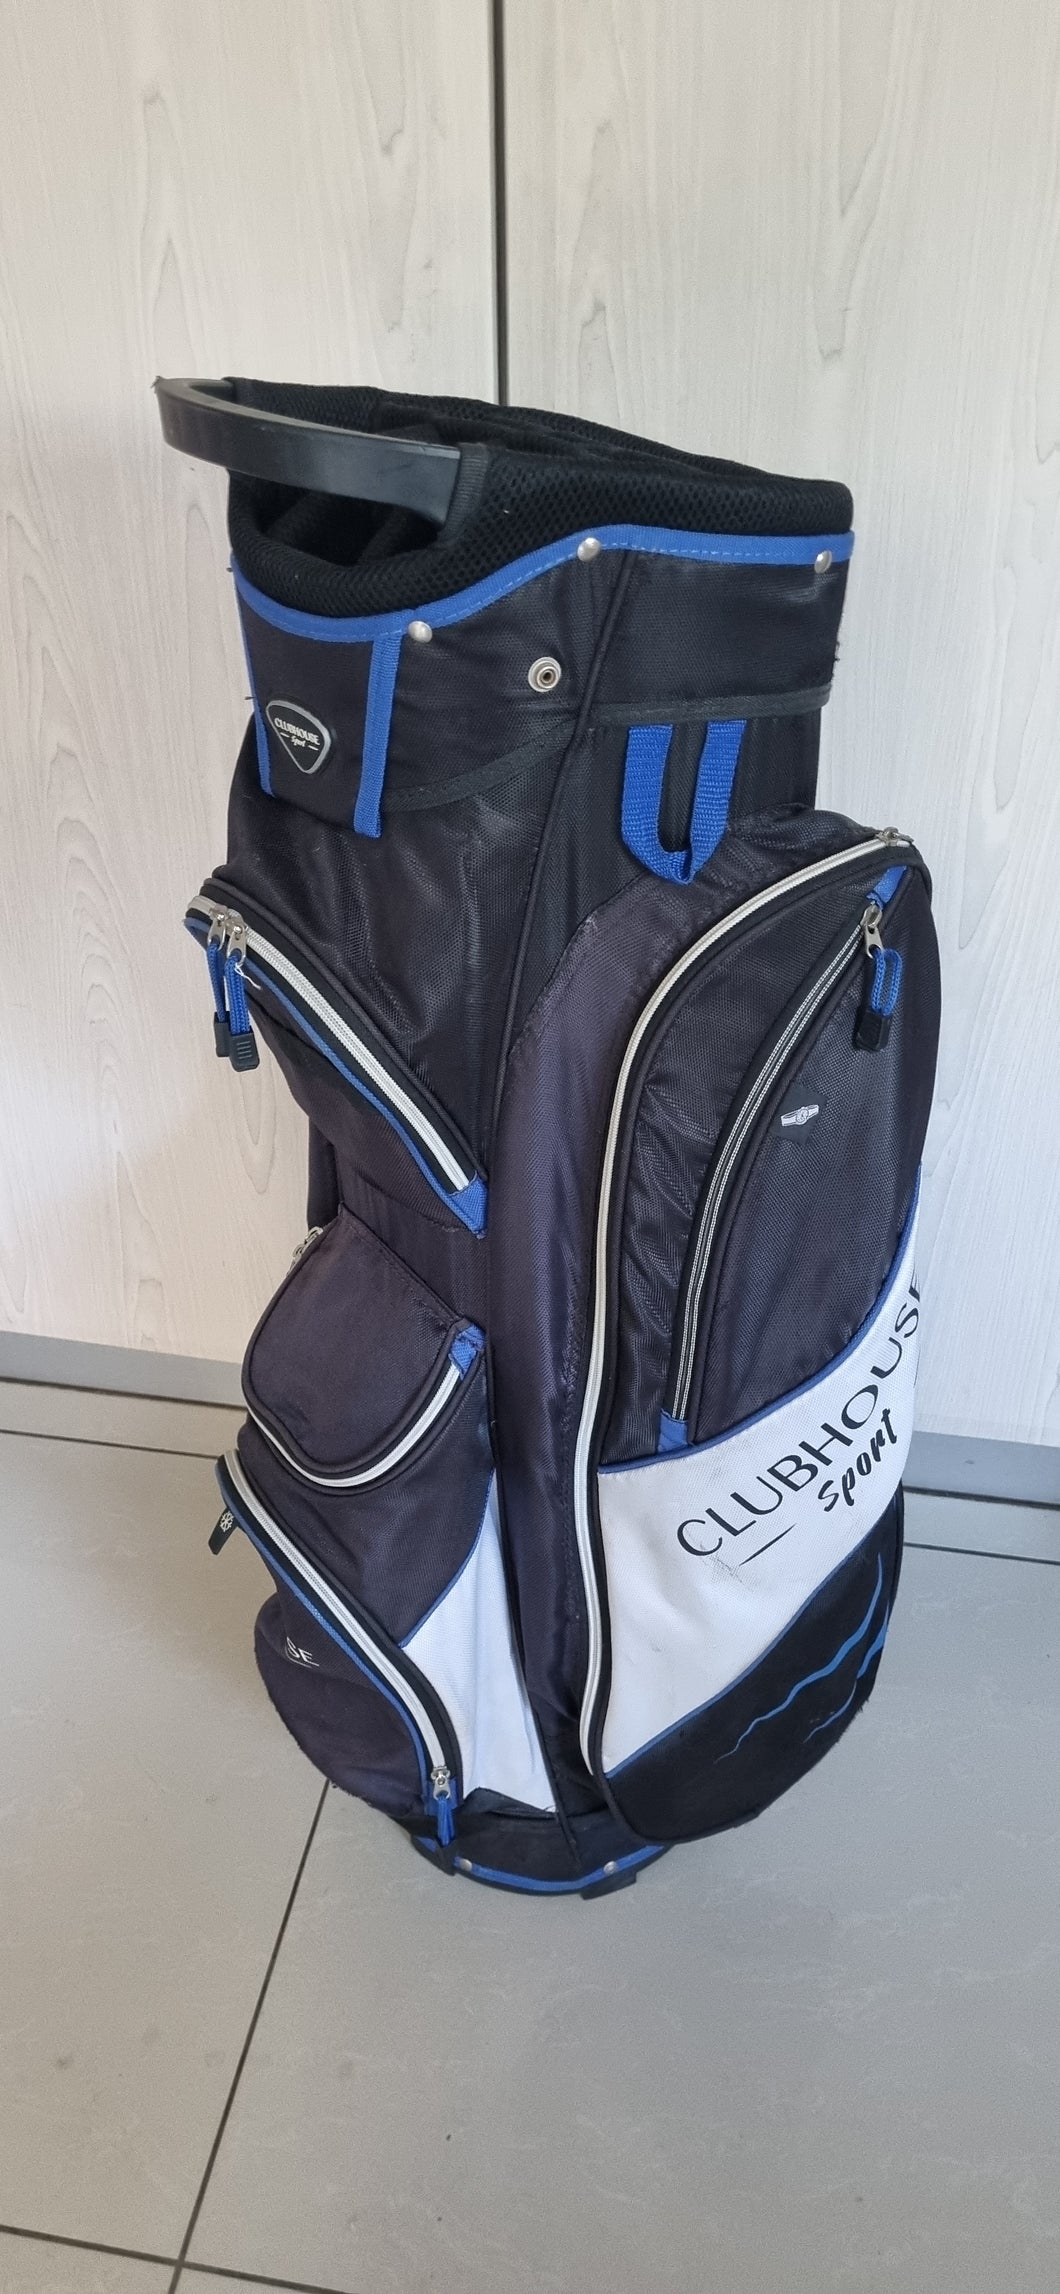 Clubhouse Sport Golf Cart Bag